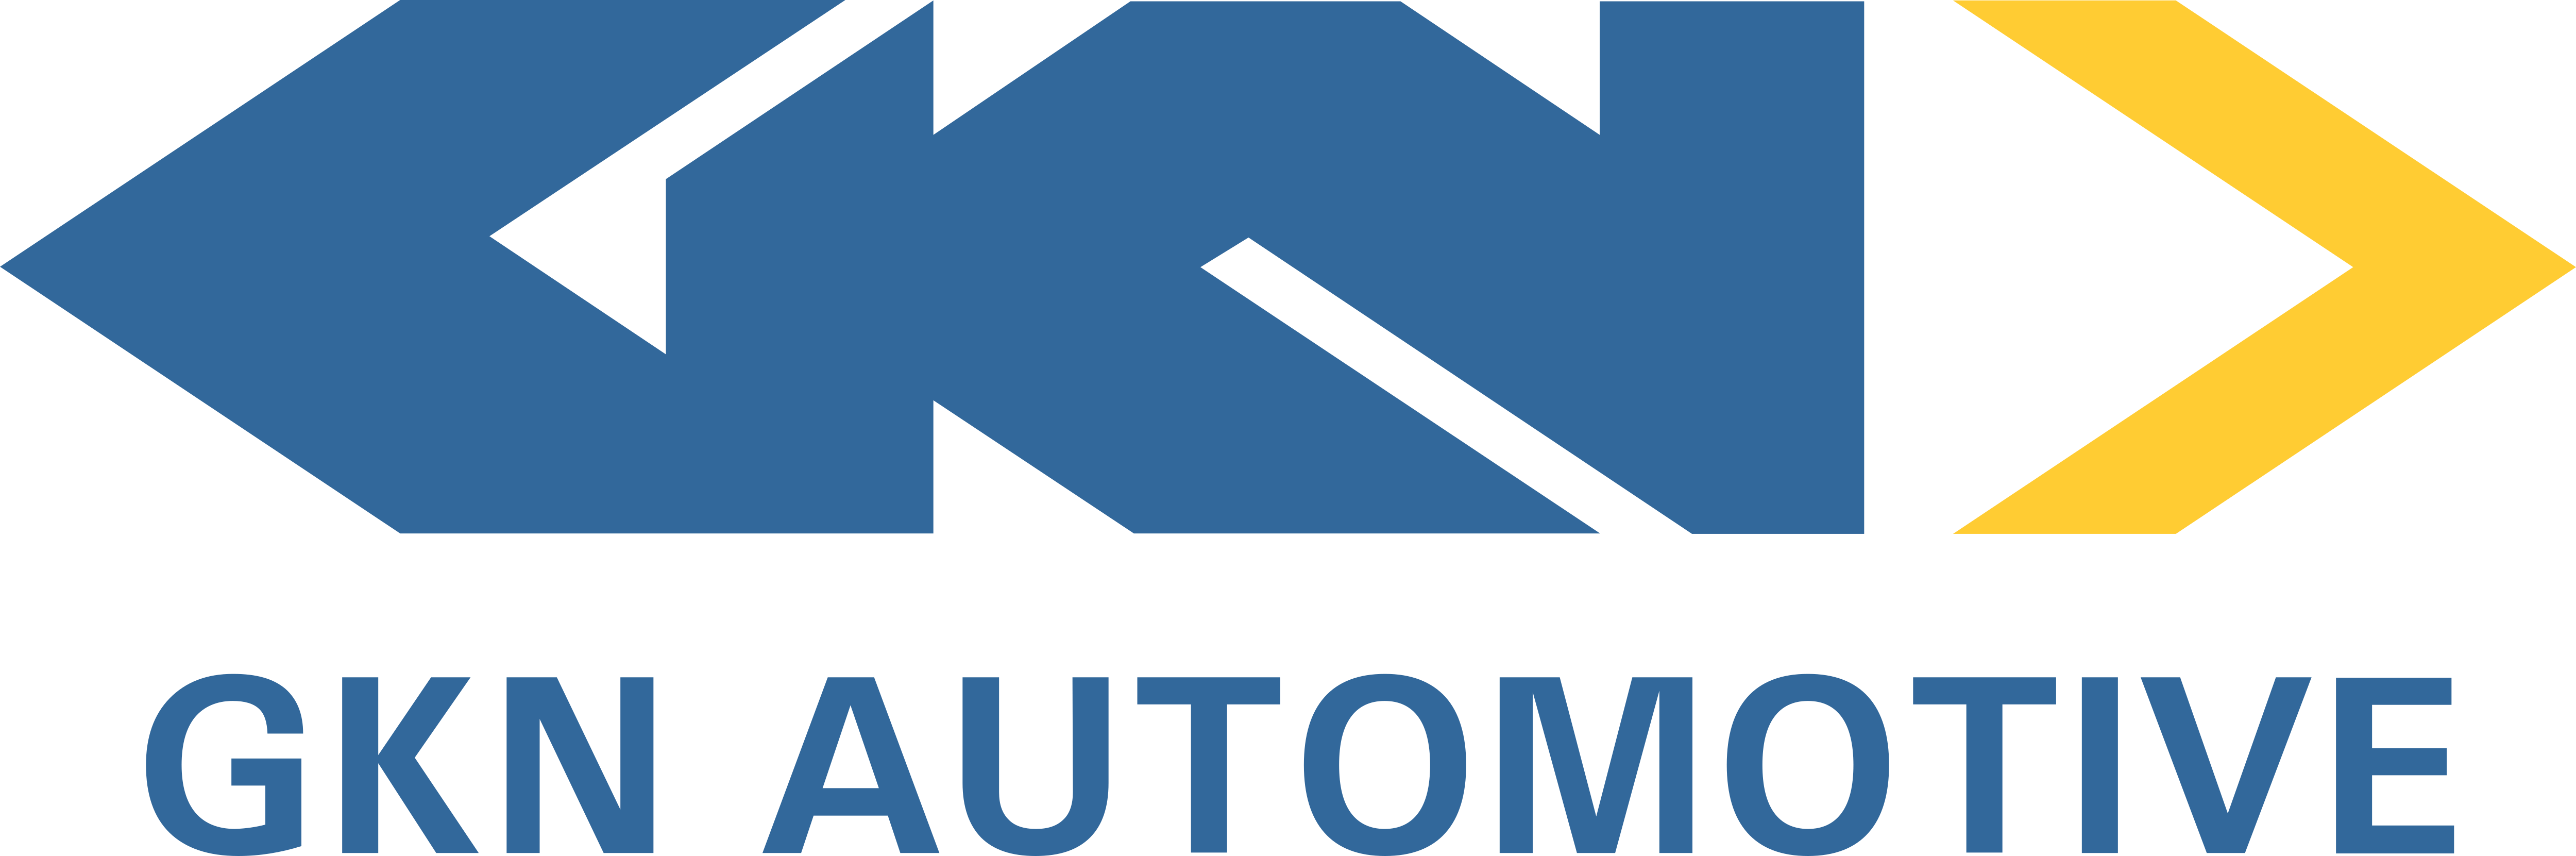 GKN_Automotive_Logo